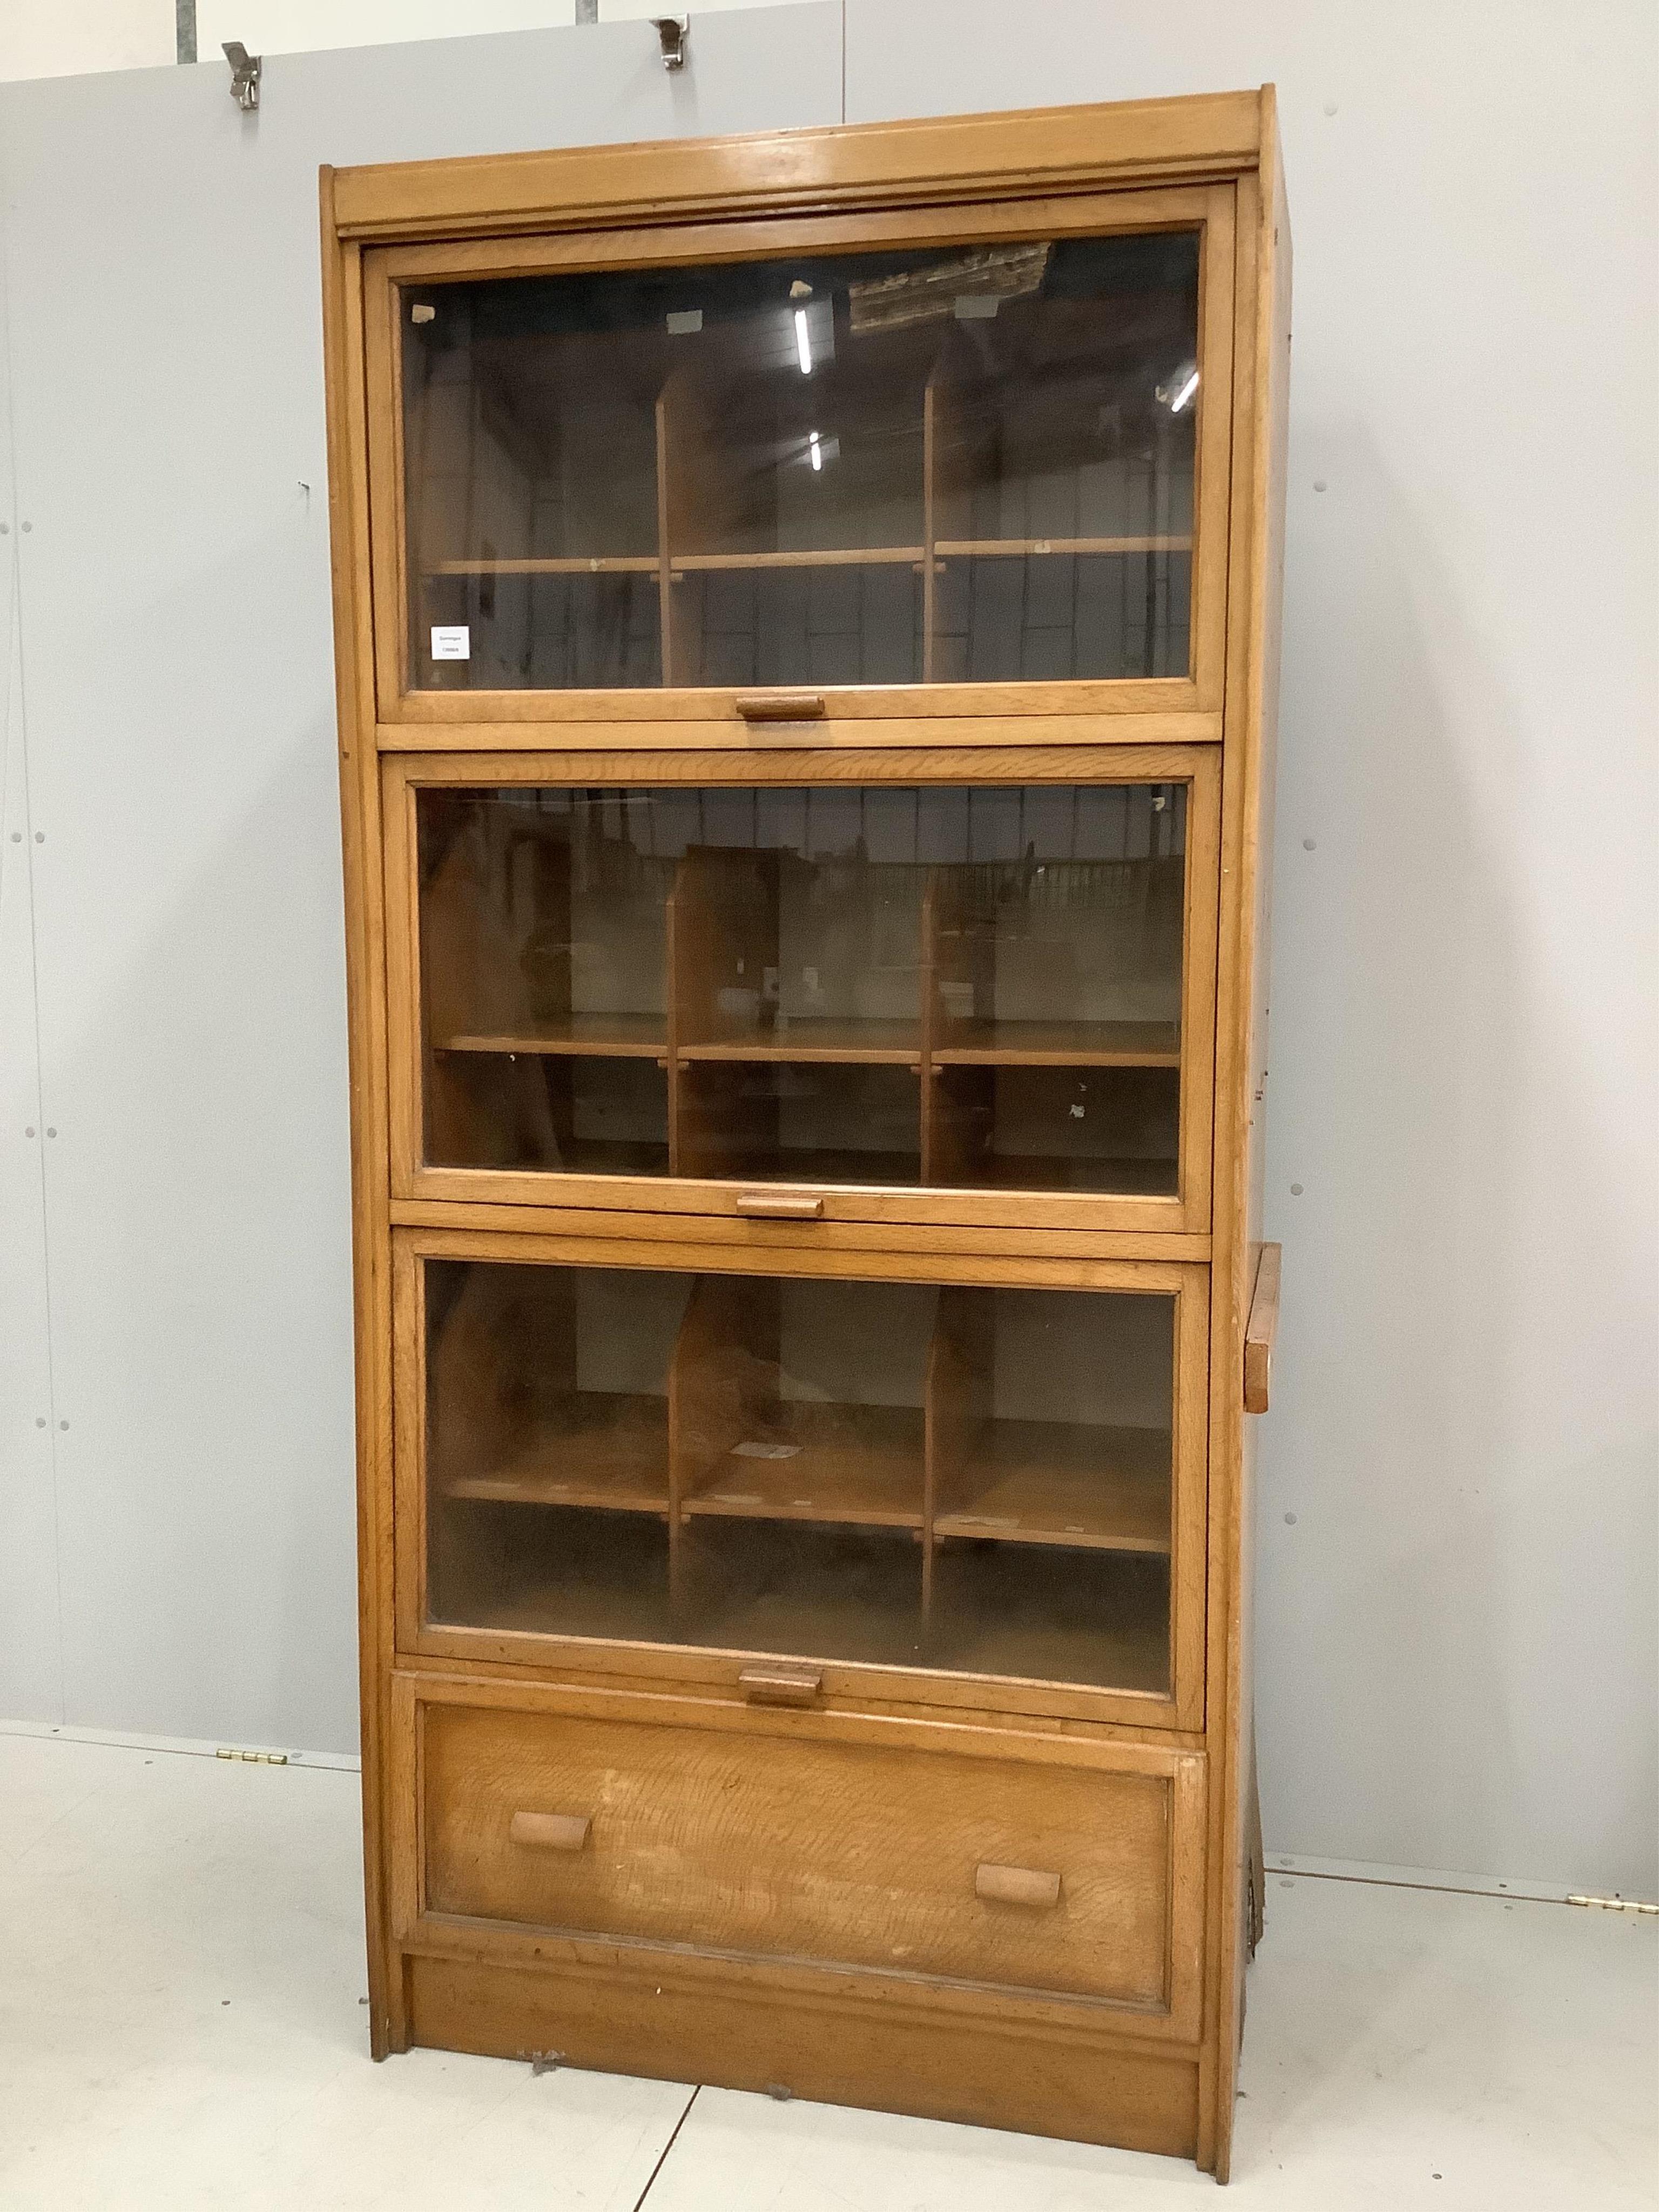 A mid century glazed oak haberdasher's cabinet, width 92cm, depth 50cm, height 198cm. Condition - fair